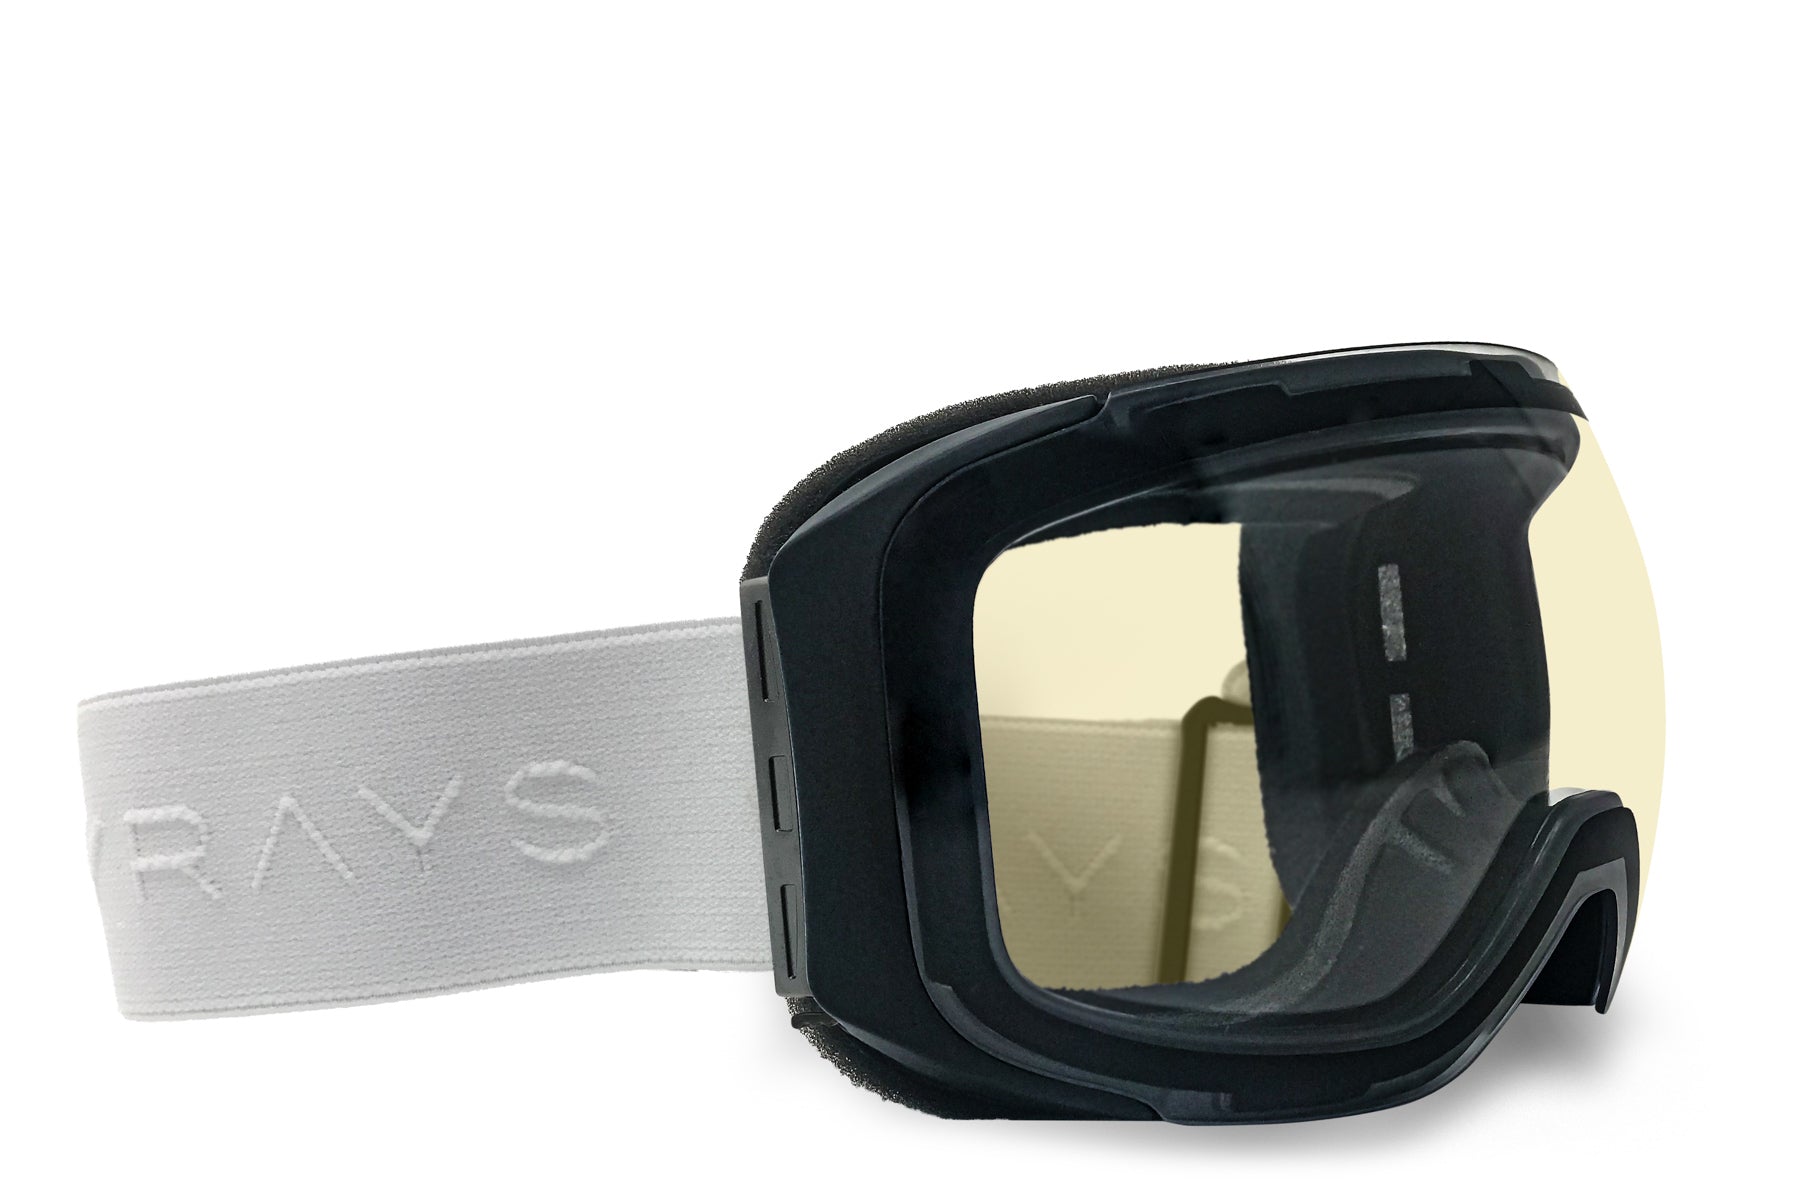 Summit Starter Shady Rays® | Polarized Sunglasses 